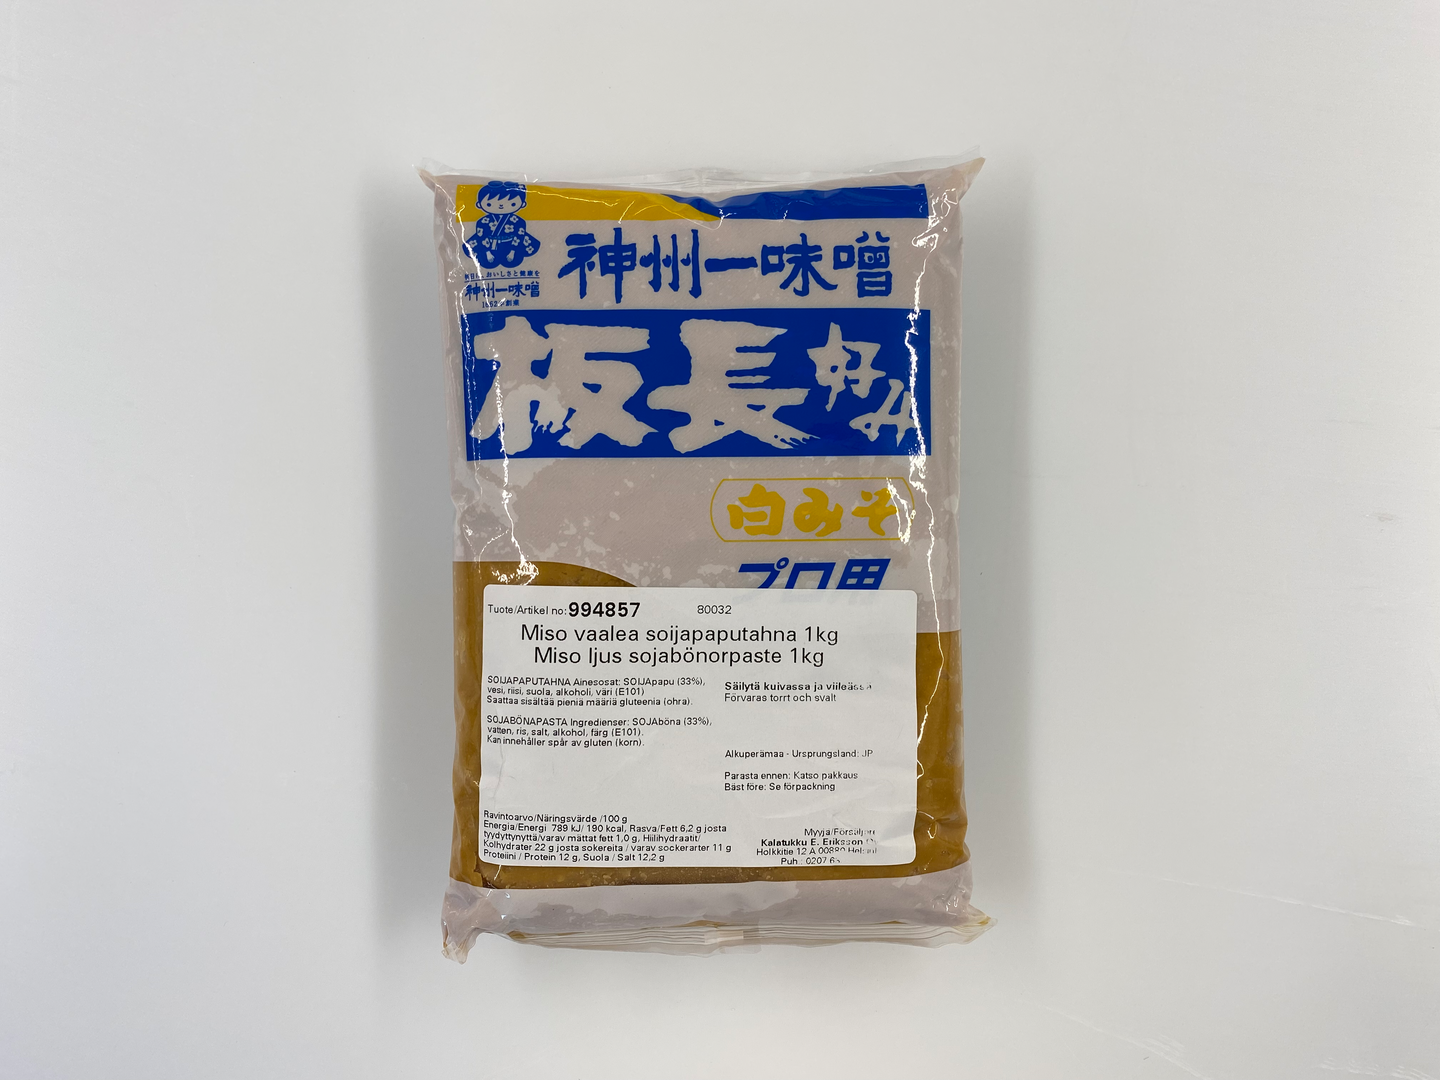 Shinshuichi miso vaalea soijapaputahna 1kg